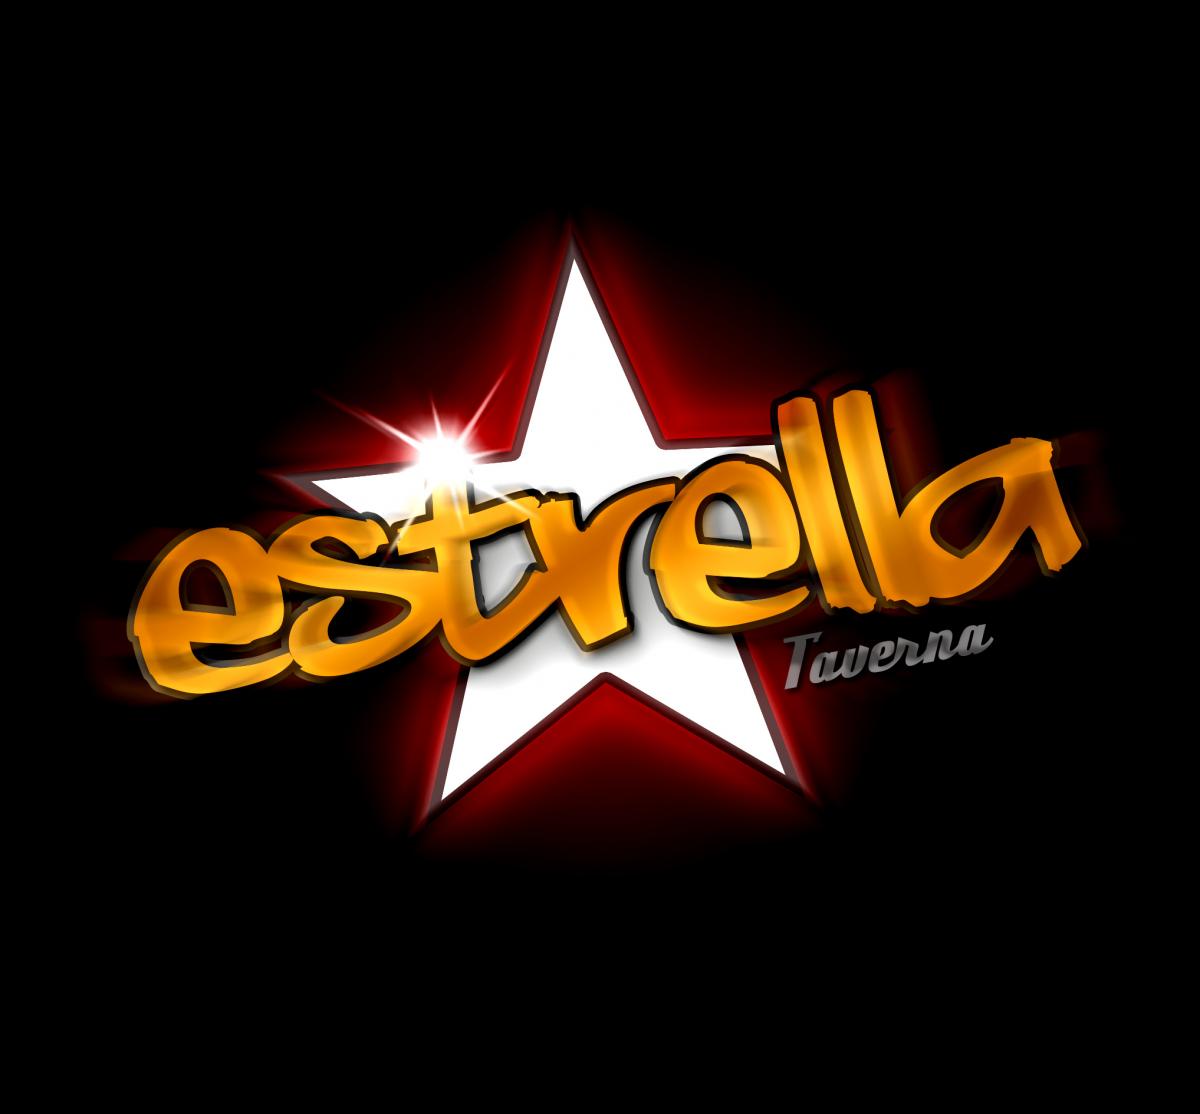 https://www.migliodorato.it/wp-content/uploads/2017/05/ESTRELLA-Logo-01.jpg